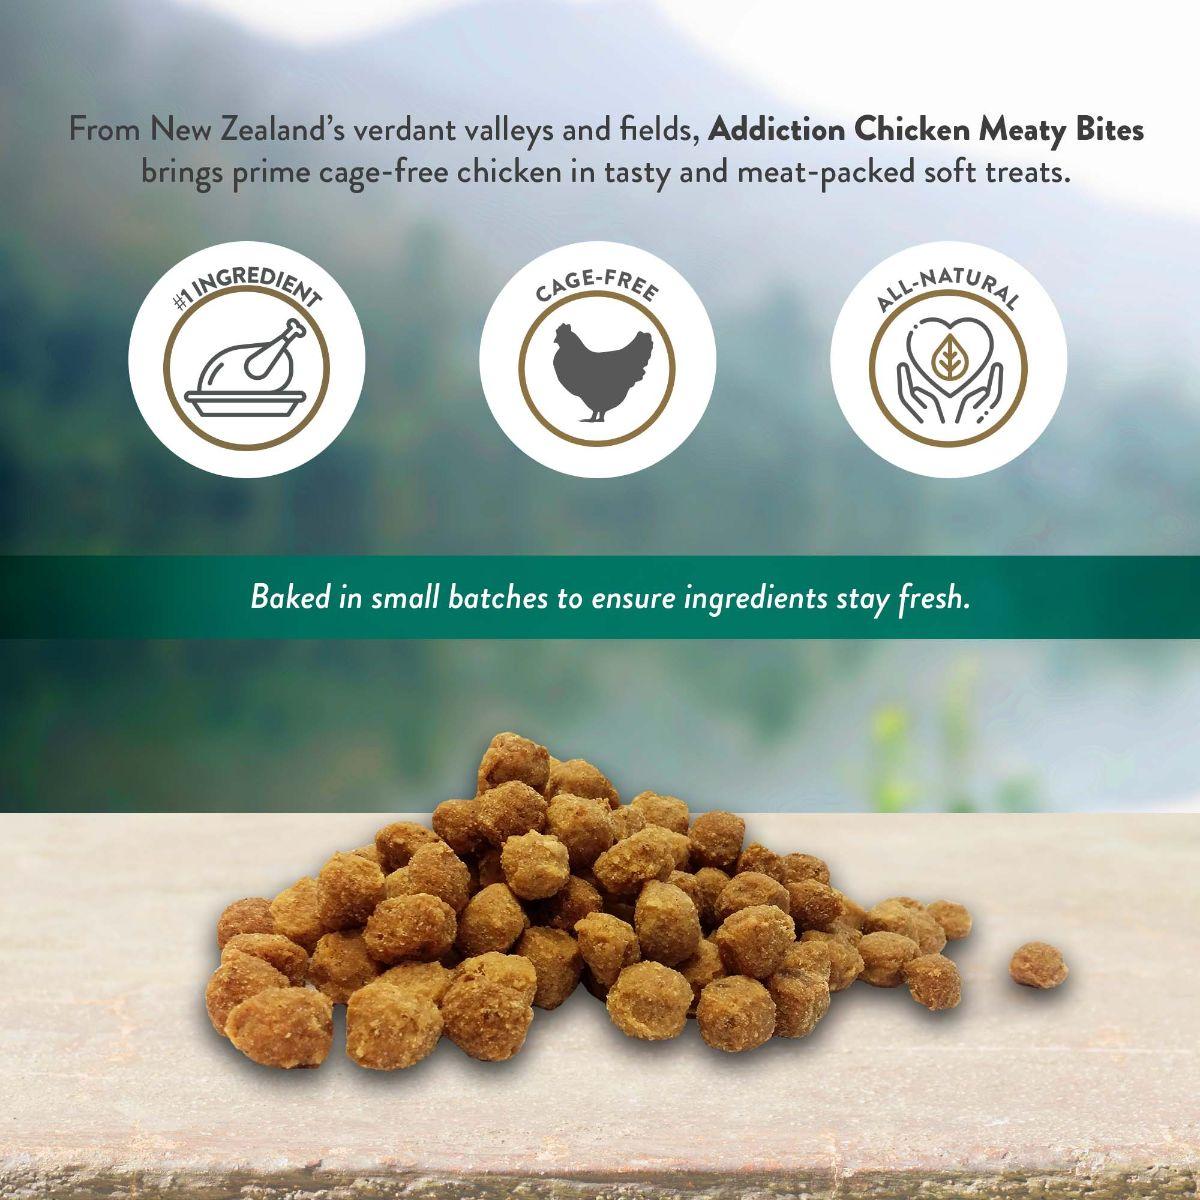 Addiction Chicken Meaty Bites, Limited Ingredients Grain-Free Dog Treats